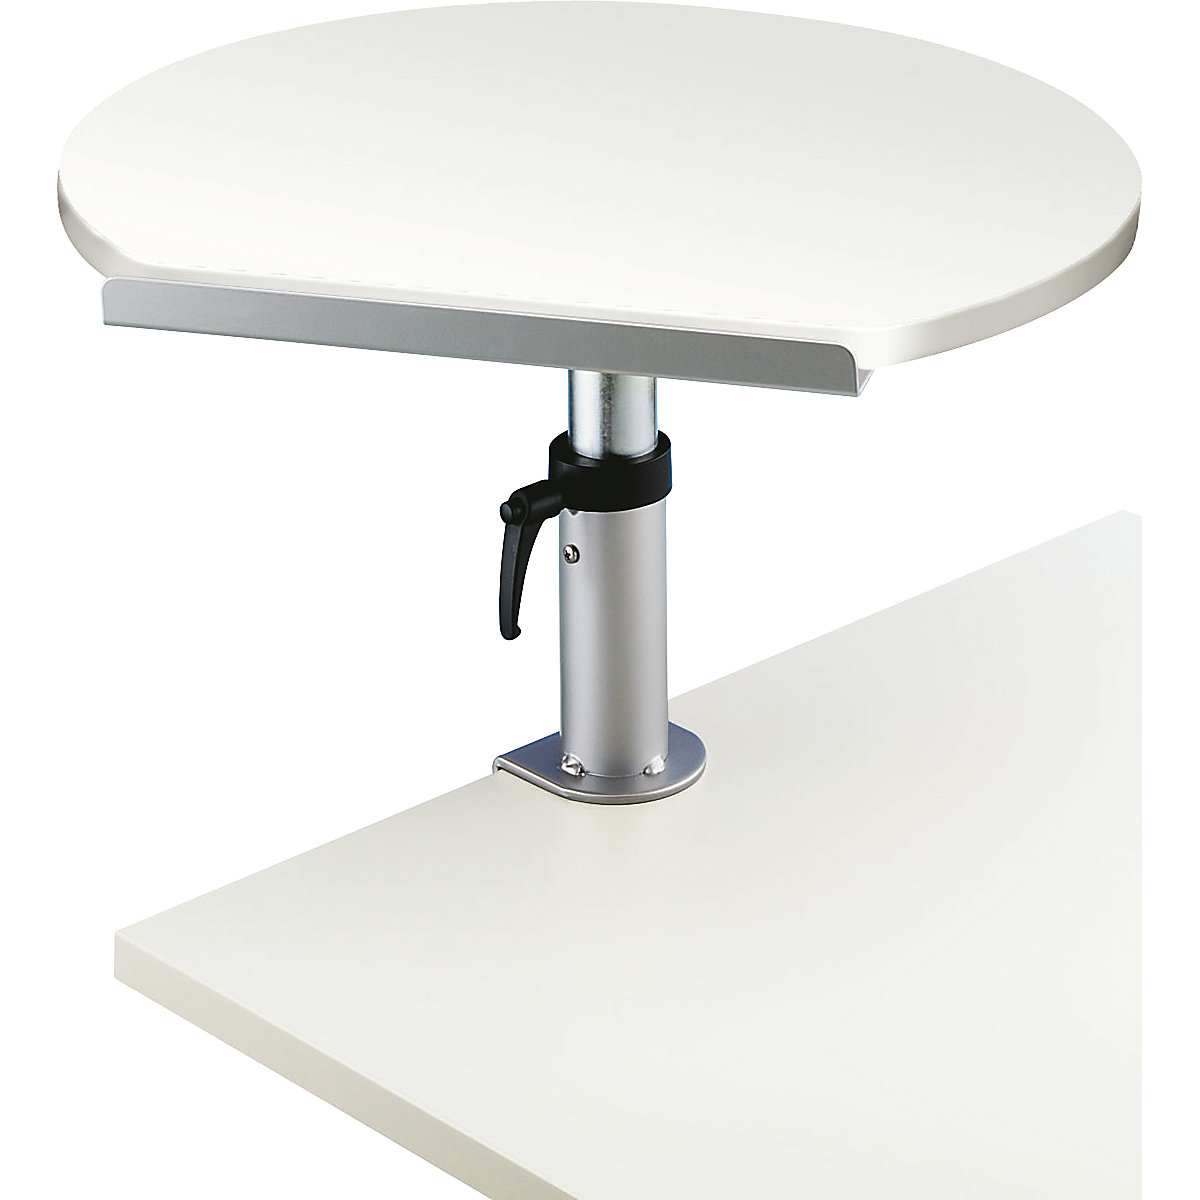 Table pedestal, ergonomic – MAUL